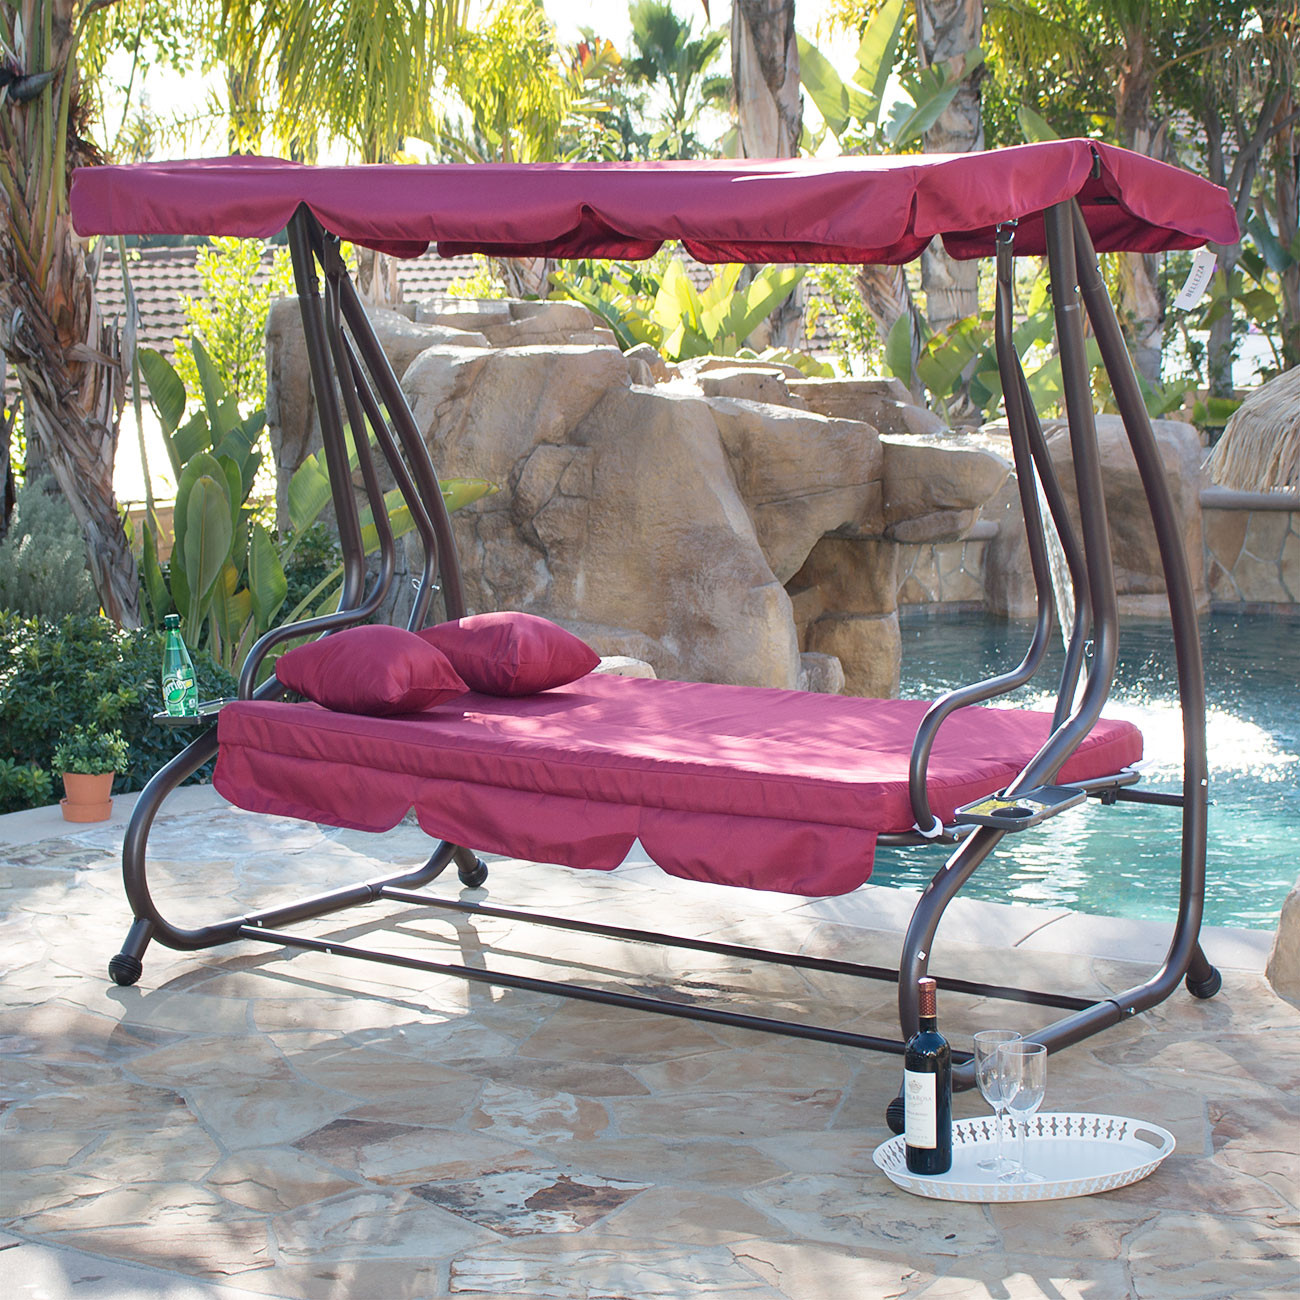 Backyard Swing Bed
 Outdoor Swing Bed Patio Adjustable Canopy Deck Porch